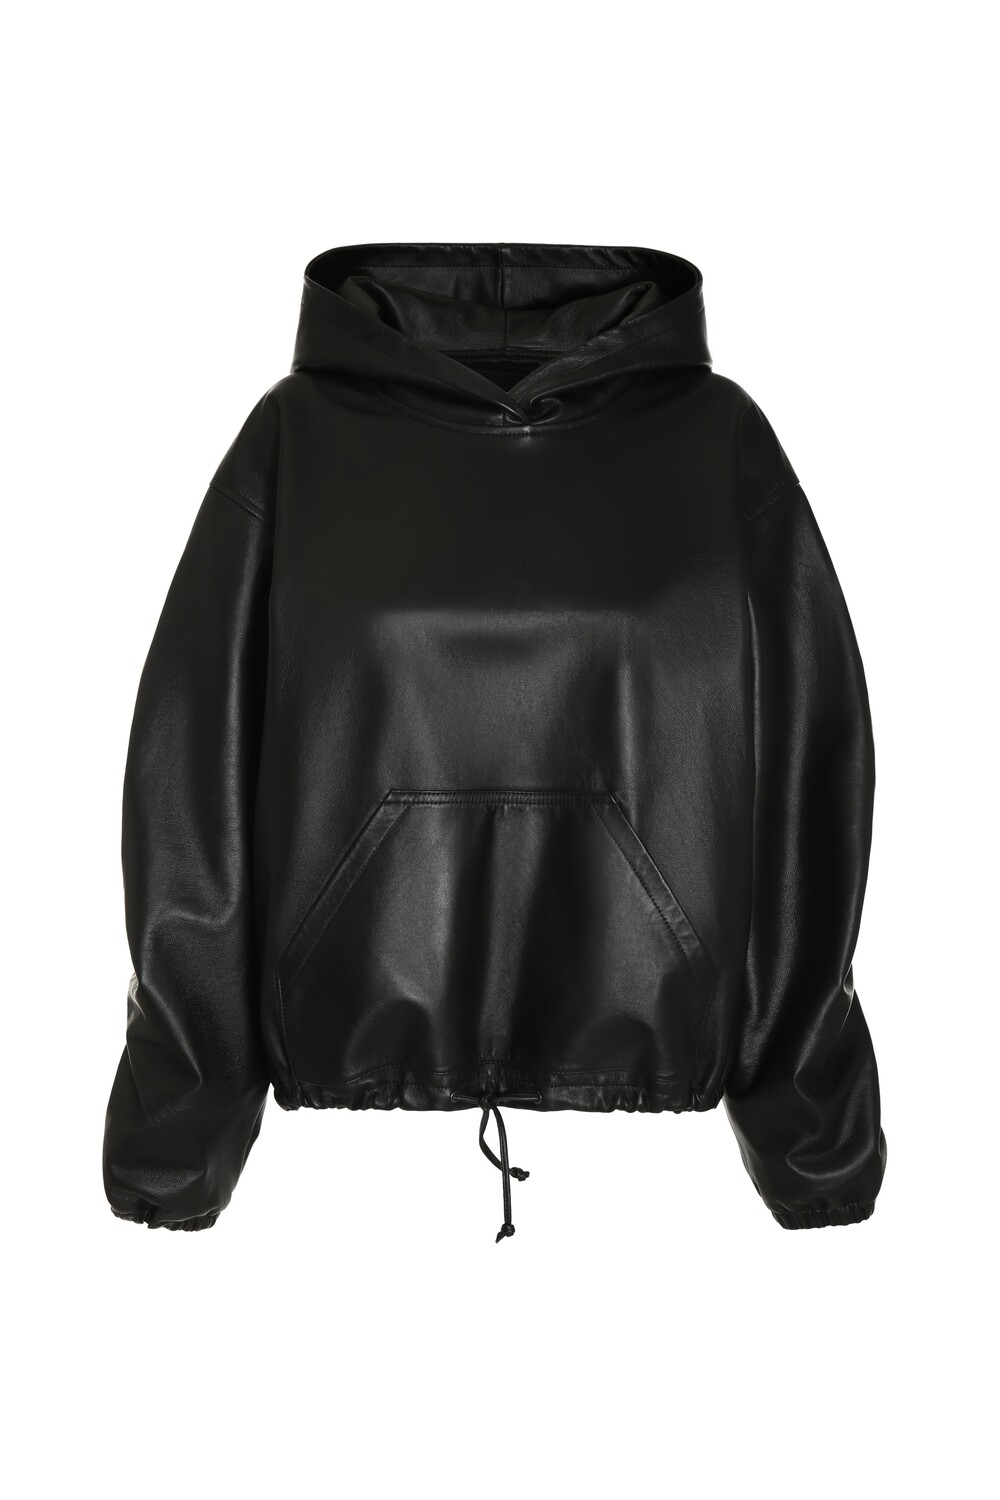 Leather hoodie black pubg фото 87